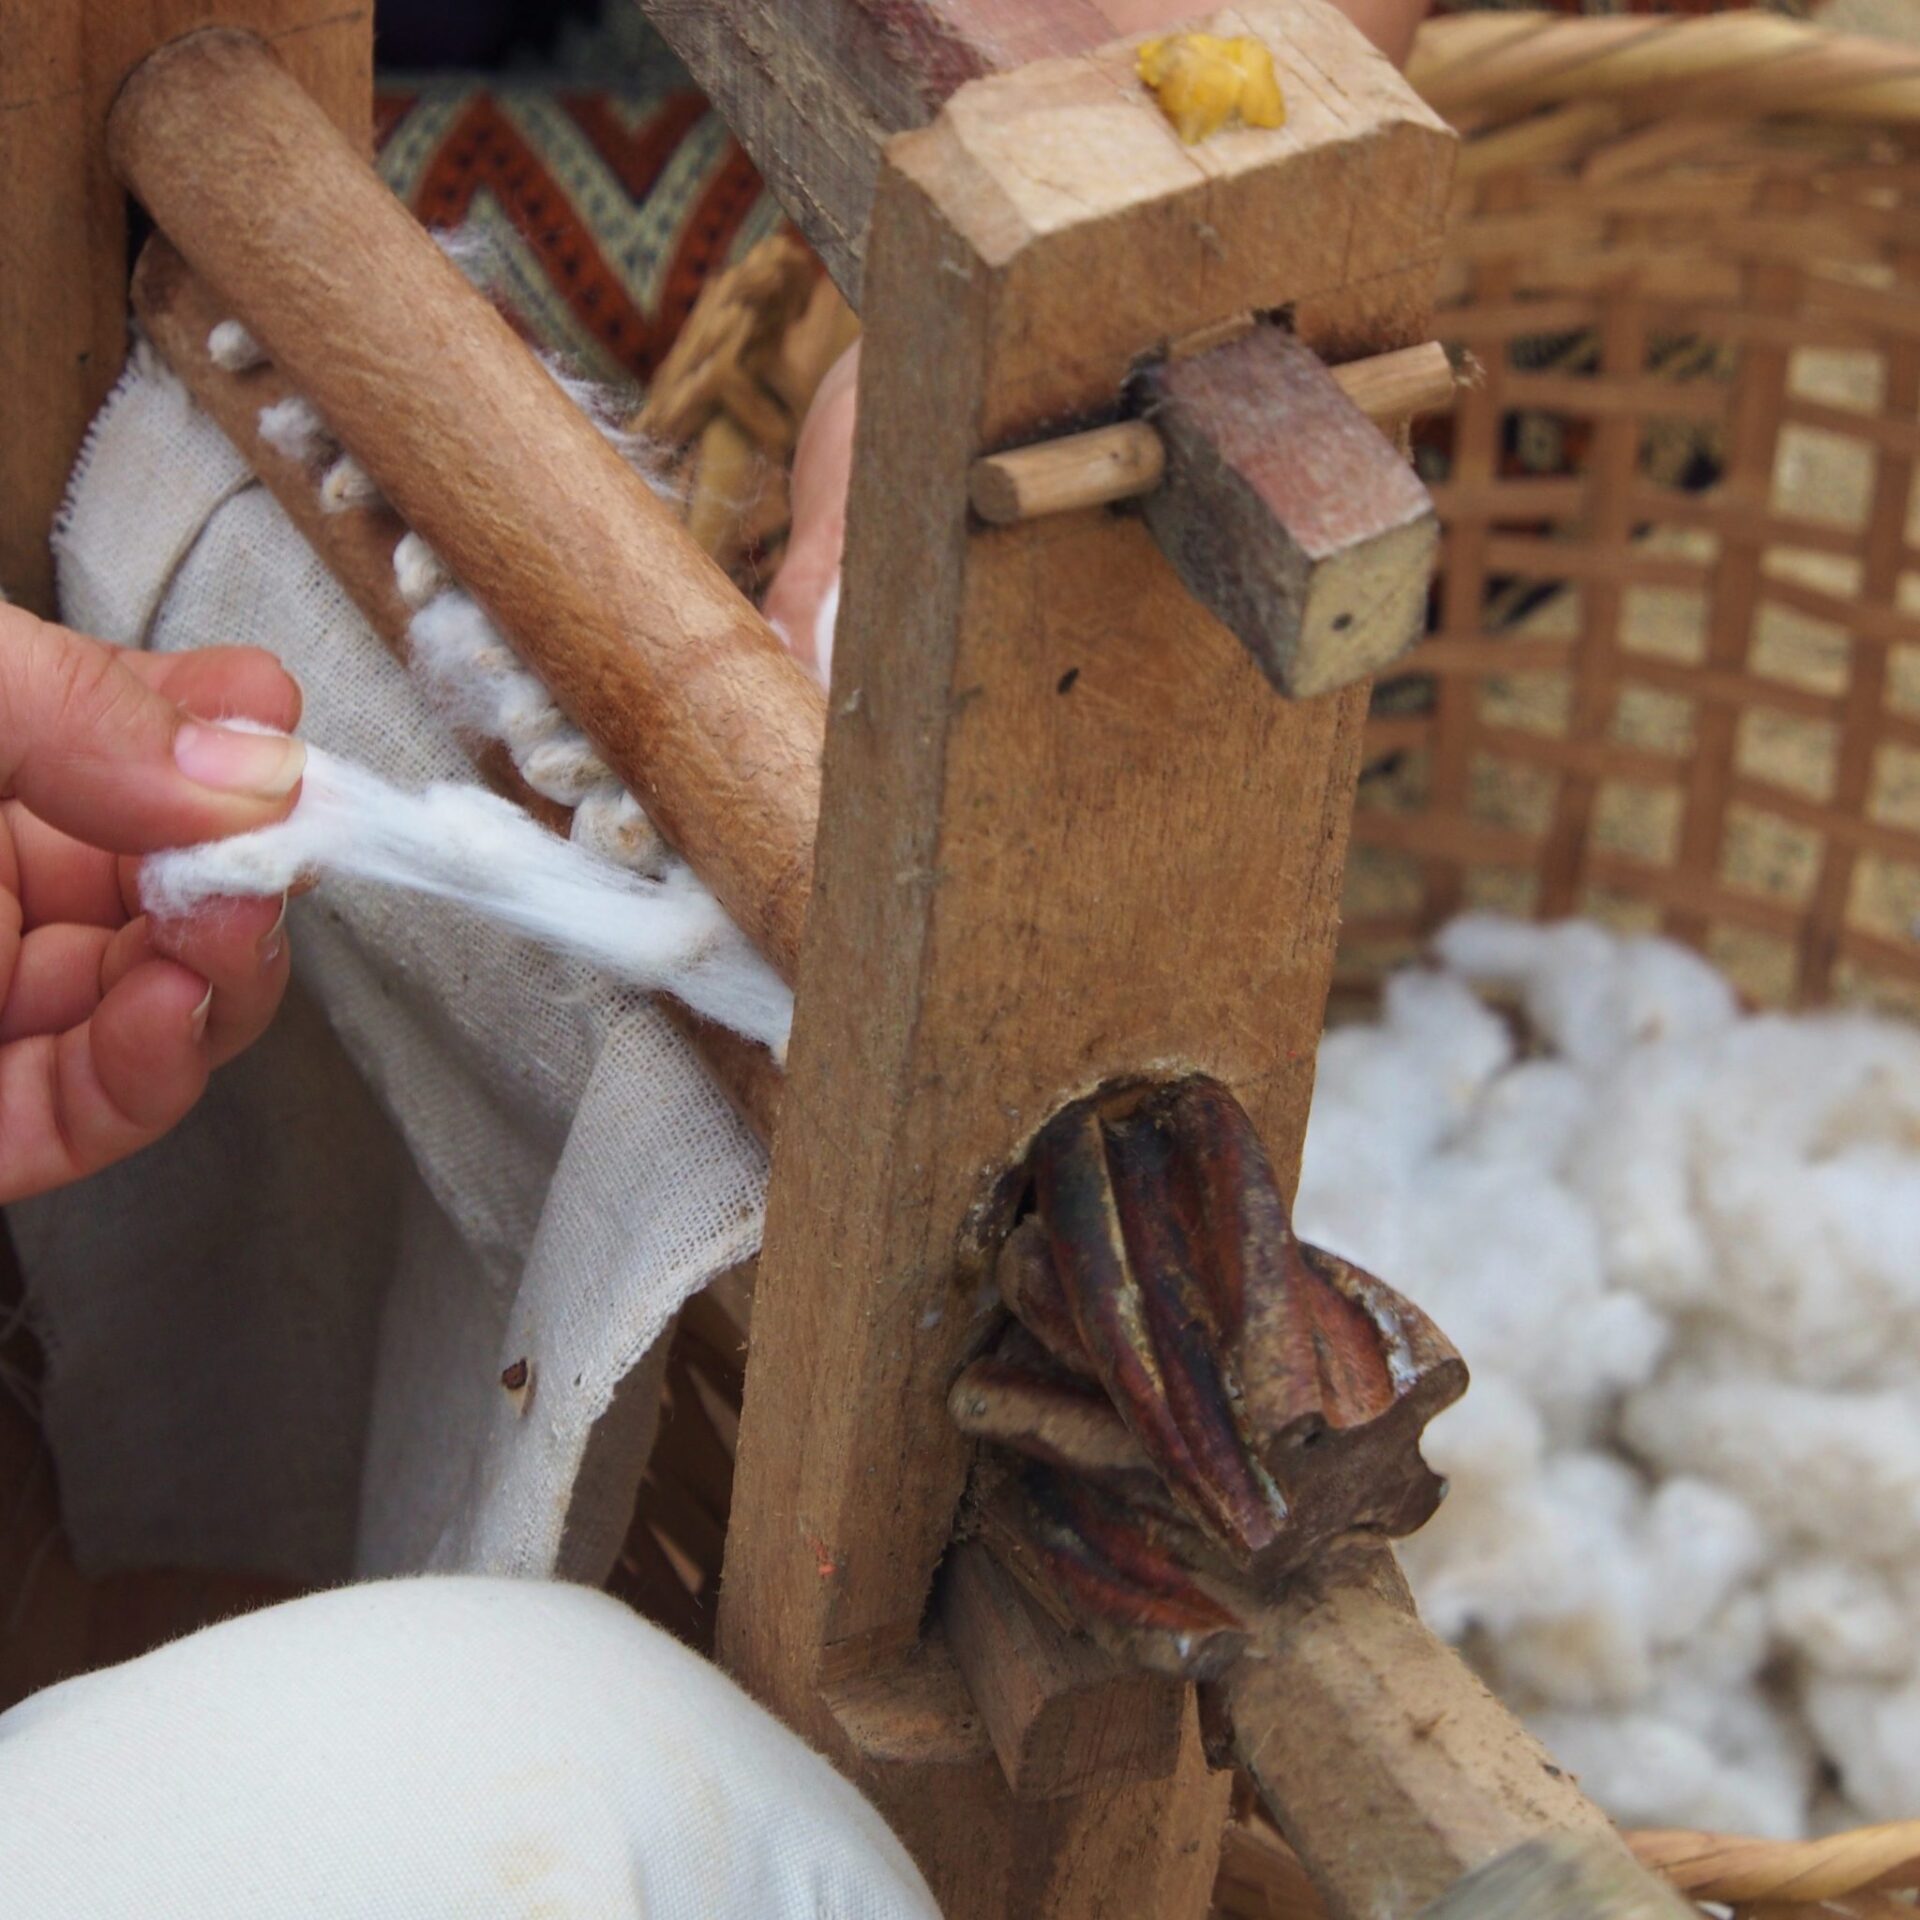 Rural artisans seeding cotton for textiles in Laos